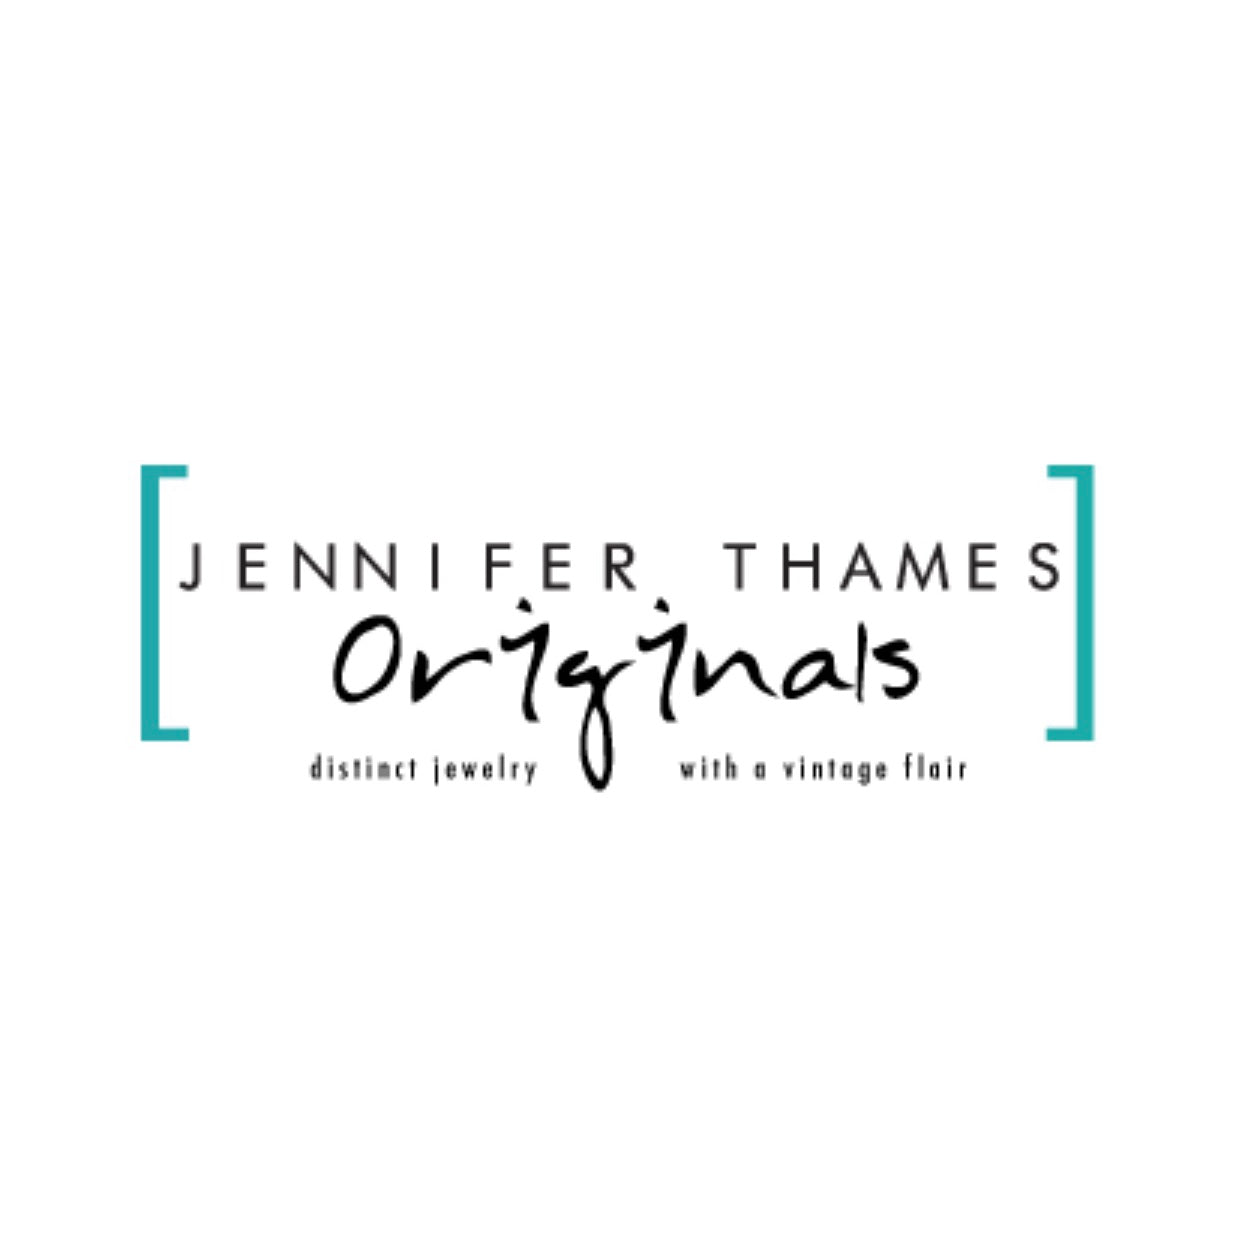 Jennifer Thames